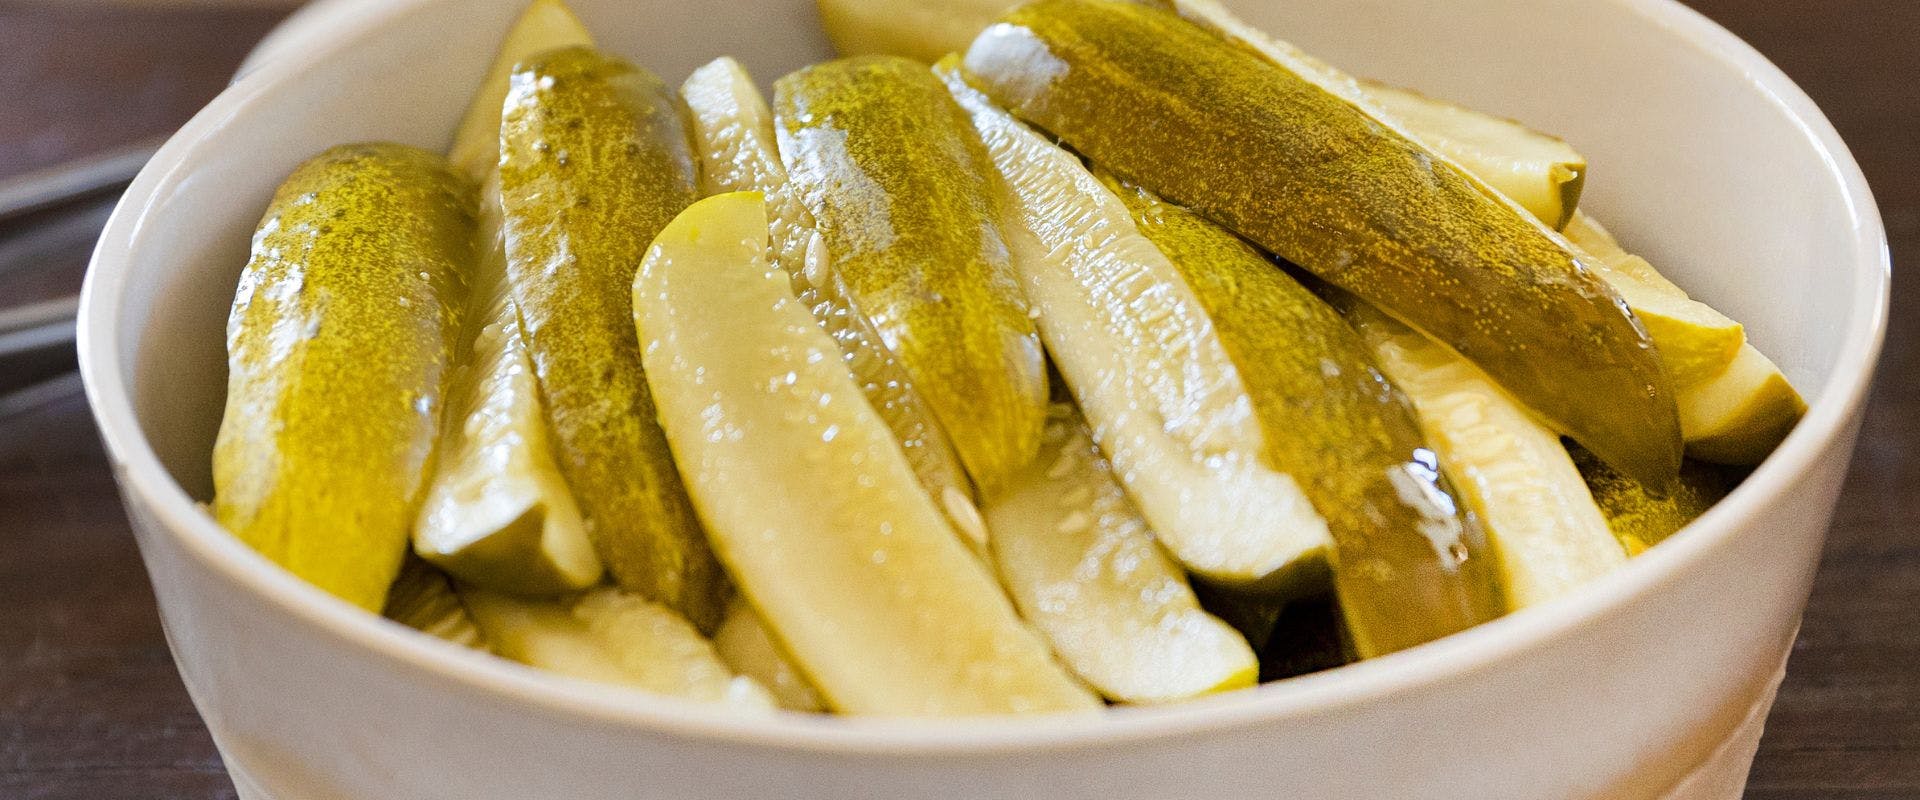 Bowl of sliced pickles